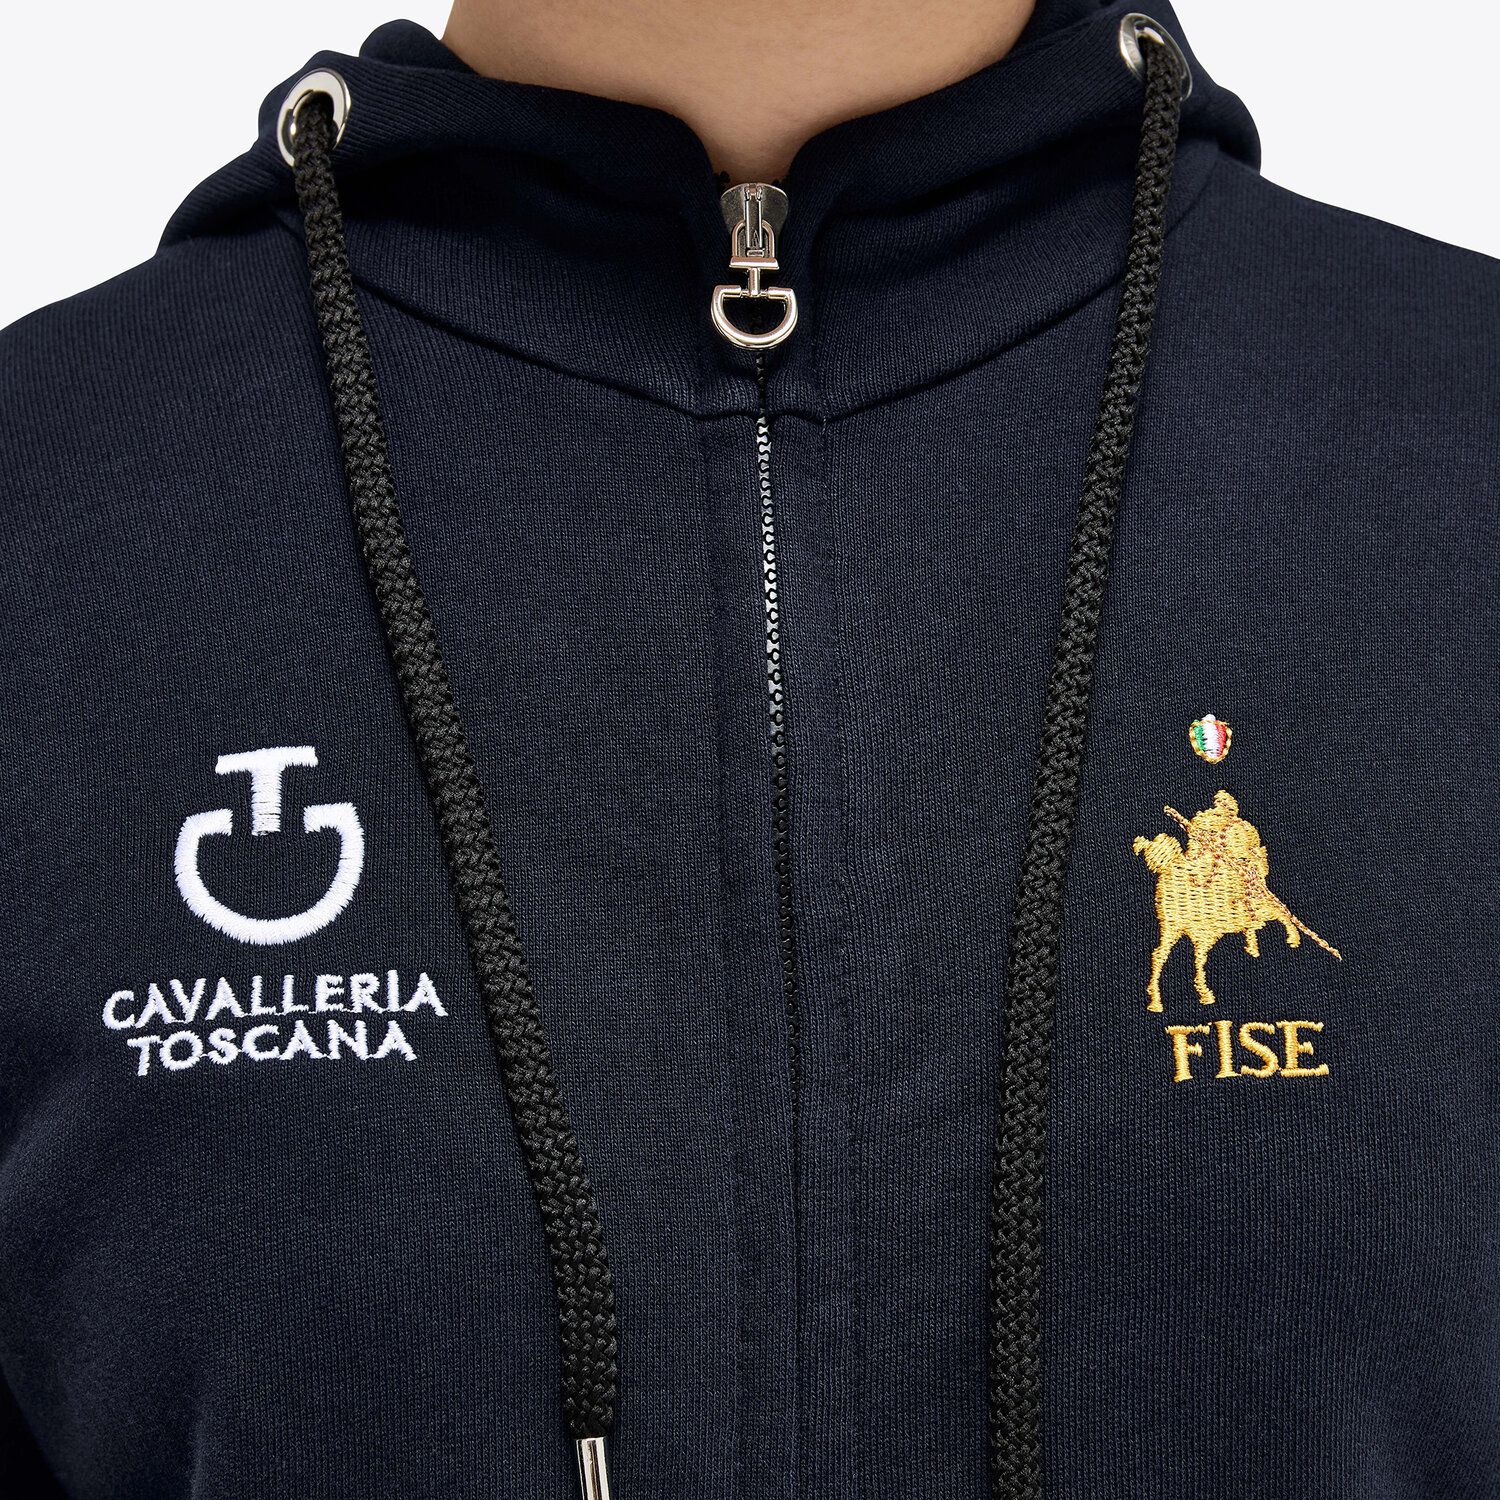 Cavalleria Toscana Unisex FISE sweatshirt with hood NAVY-4